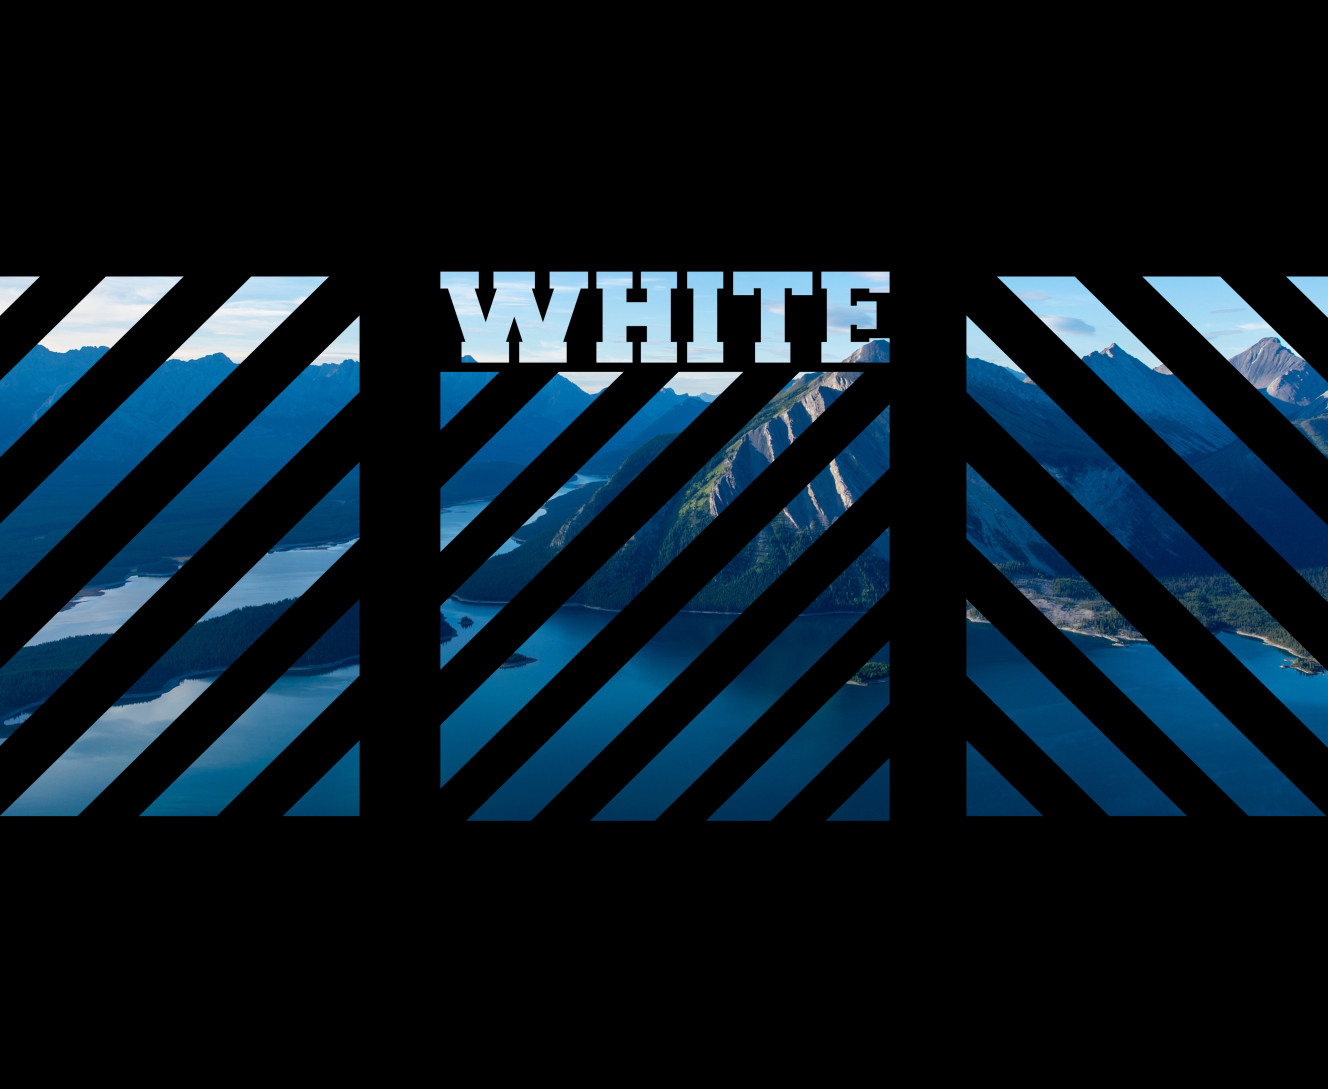 OFF WHITE (6)